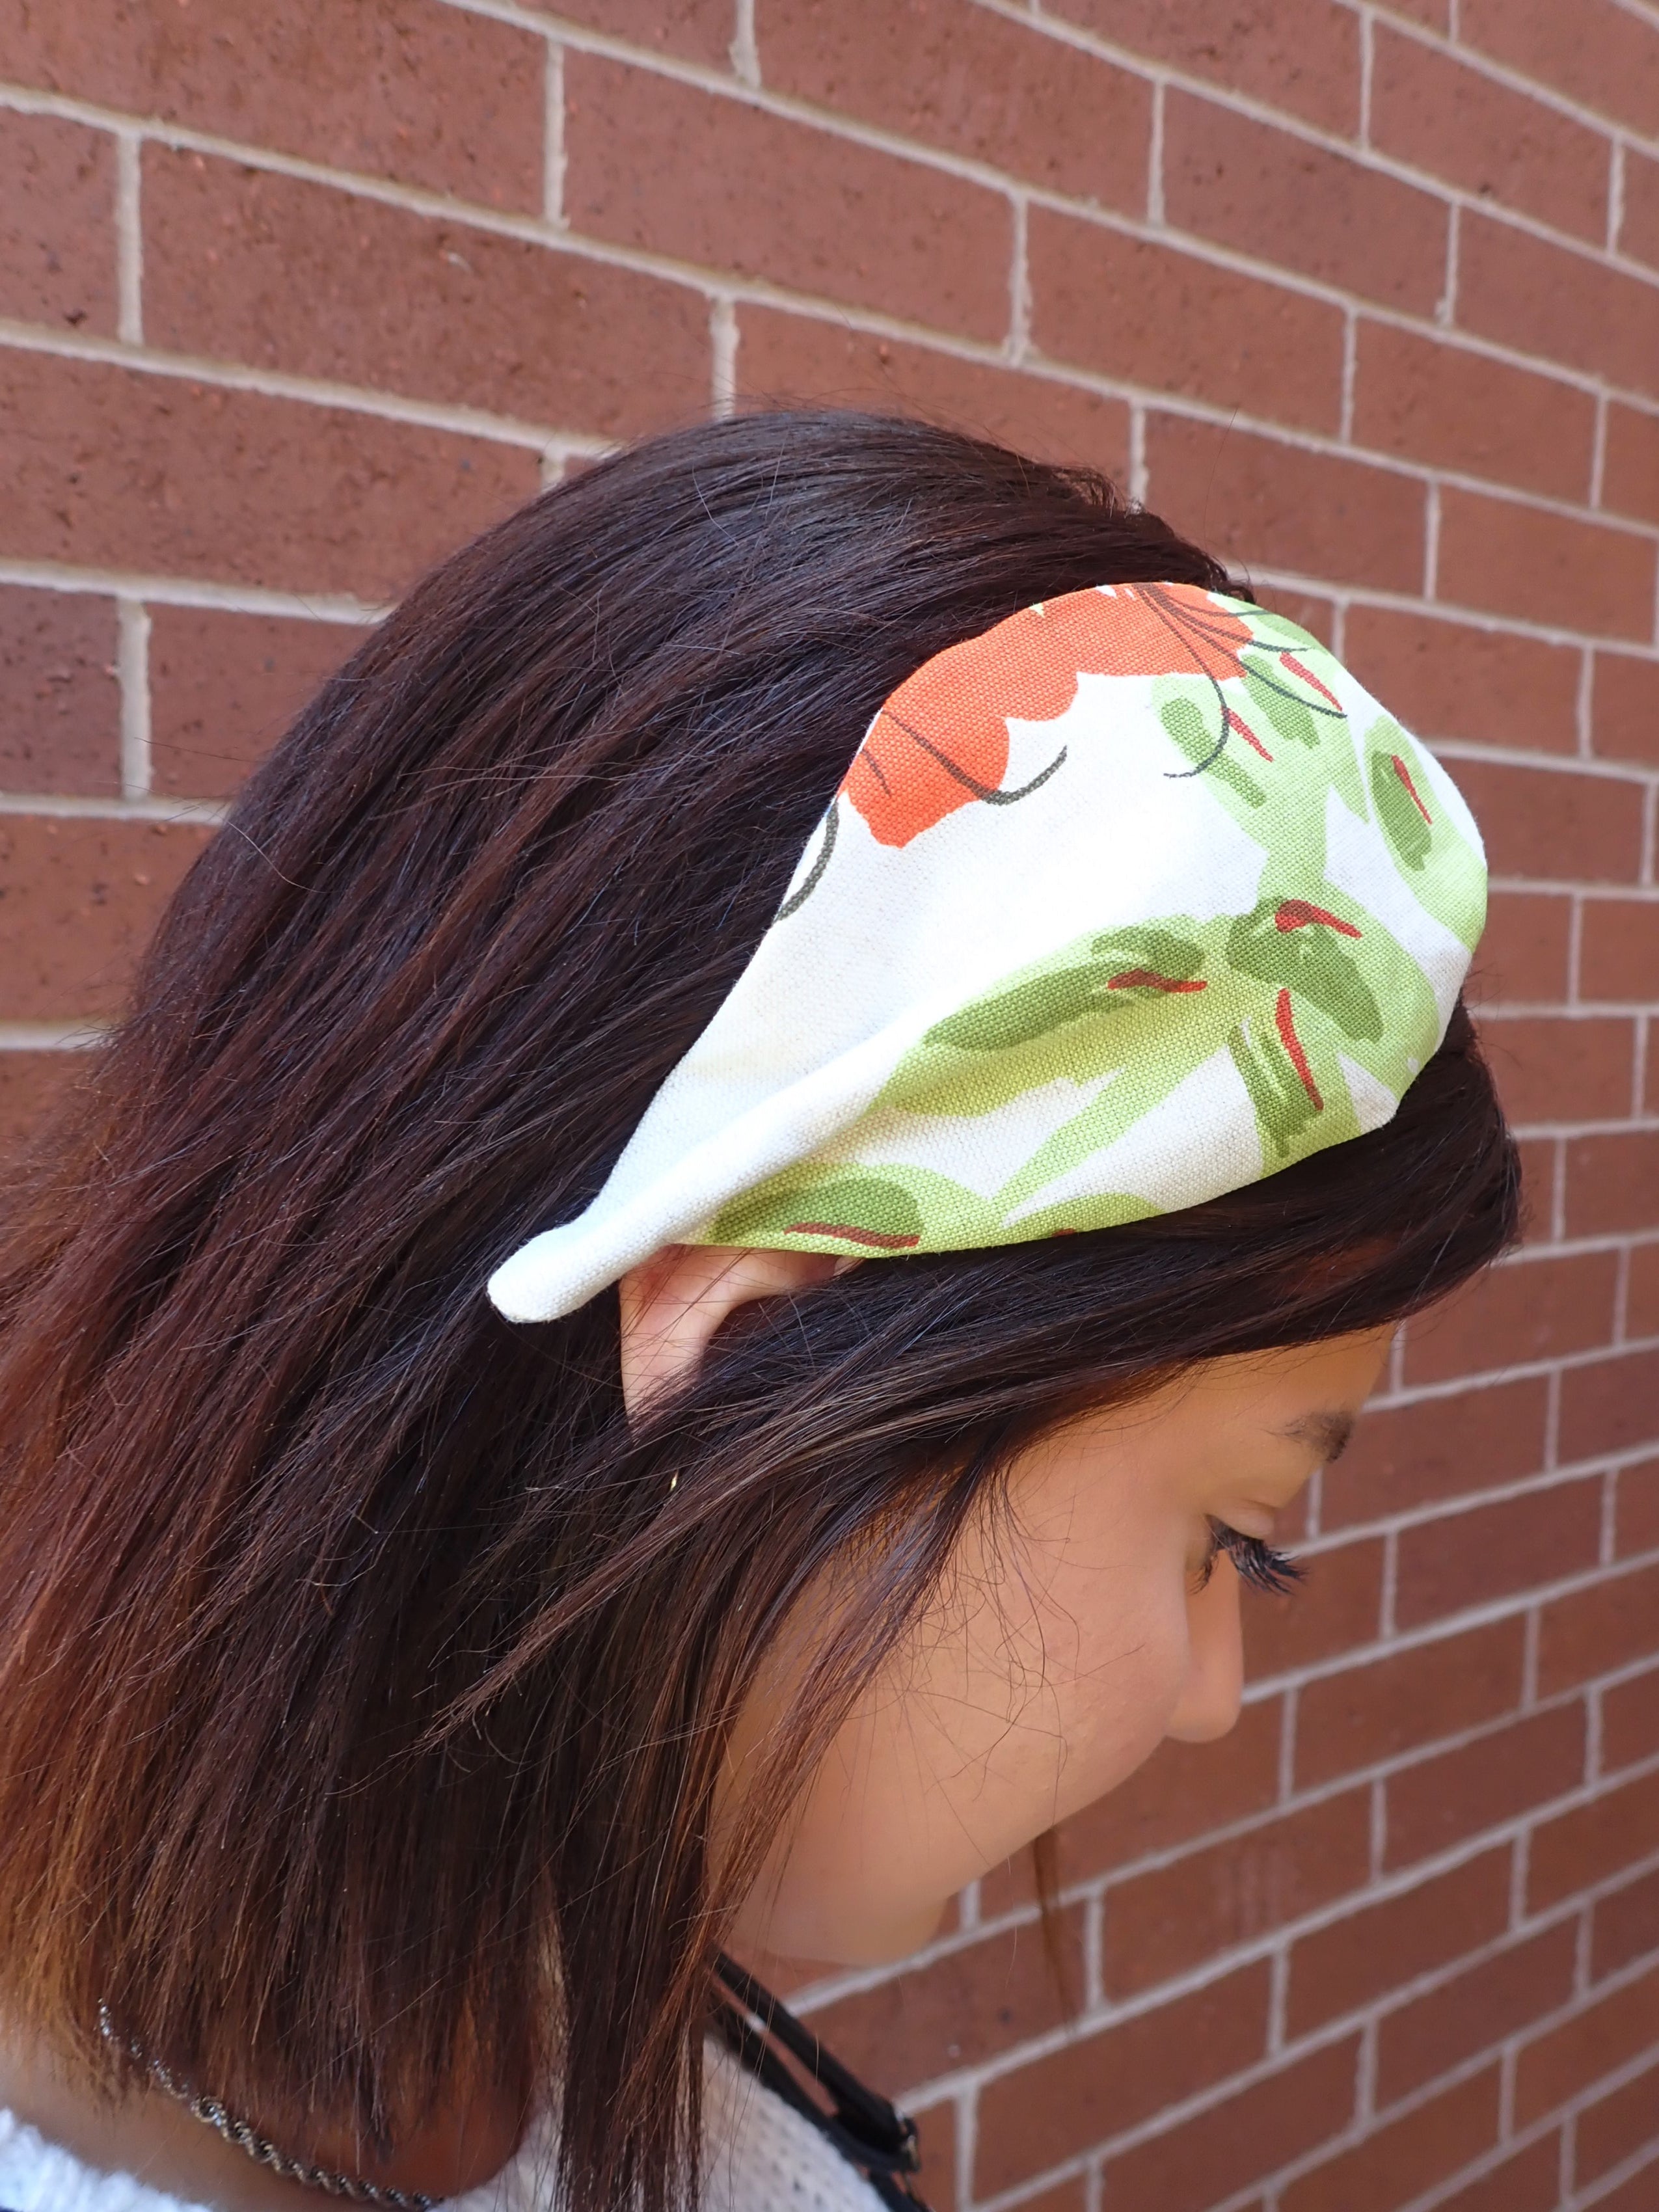 Ladies Chic Linen Turban Headband. Repurposed Fabric Headband Hat Accessory.